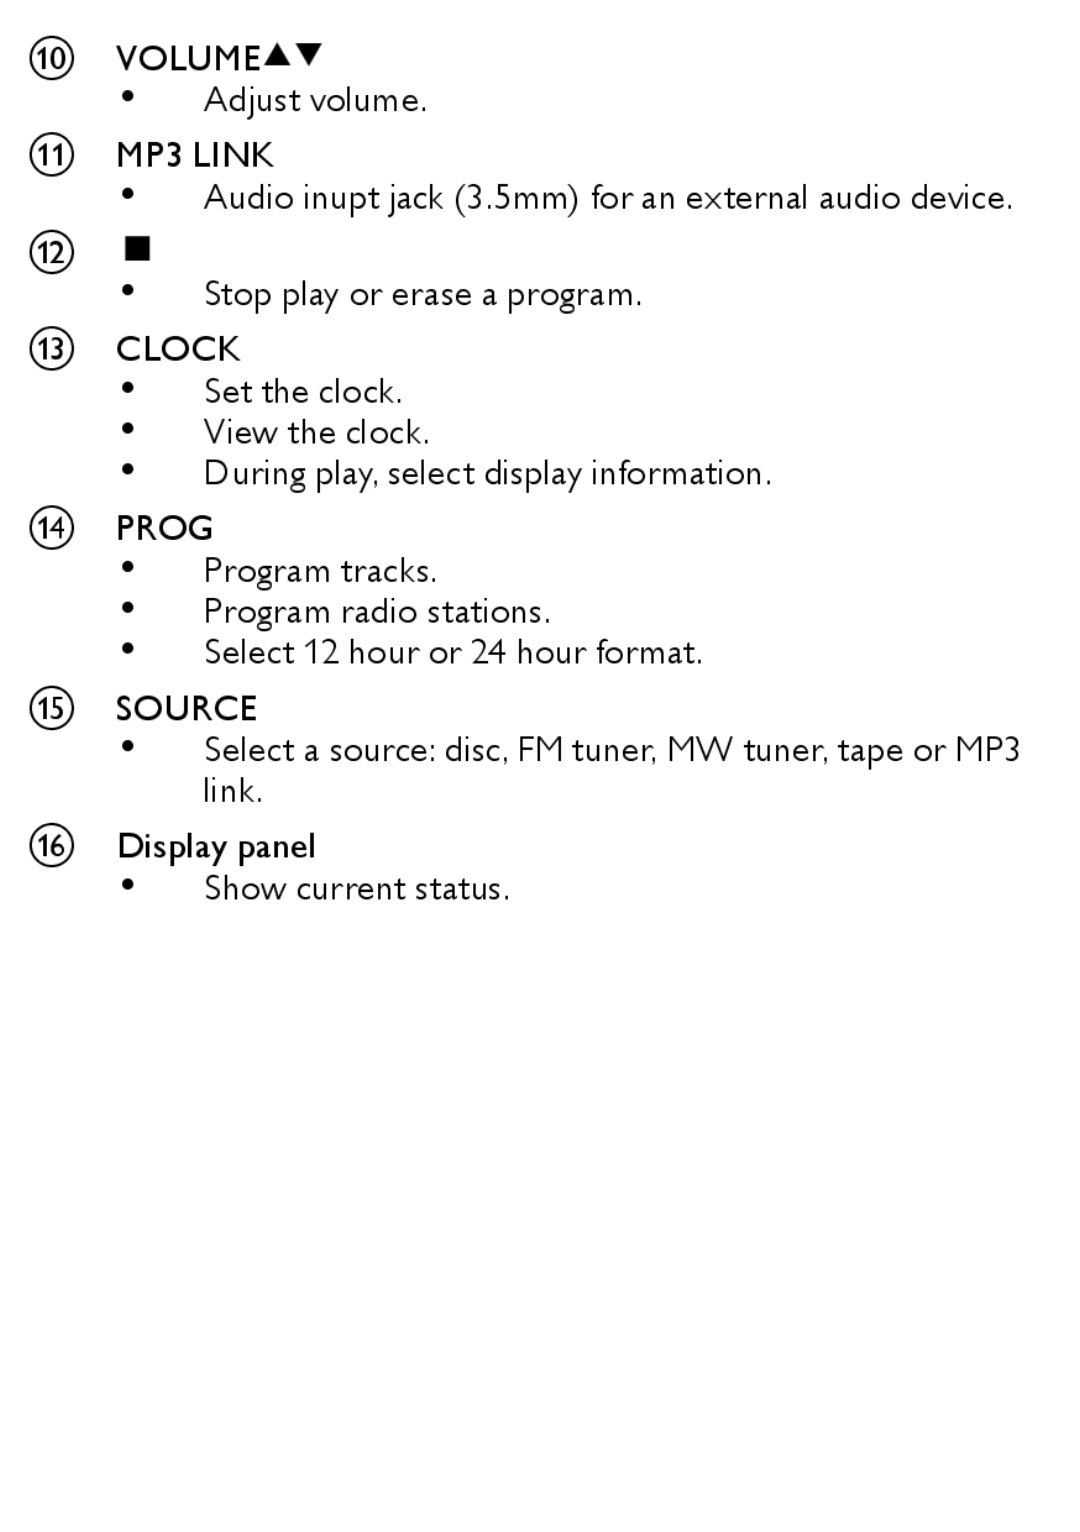 Philips MCM167 JVOLUME Adjust volume KMP3 LINK, L Stop play or erase a program MCLOCK, Set the clock View the clock 